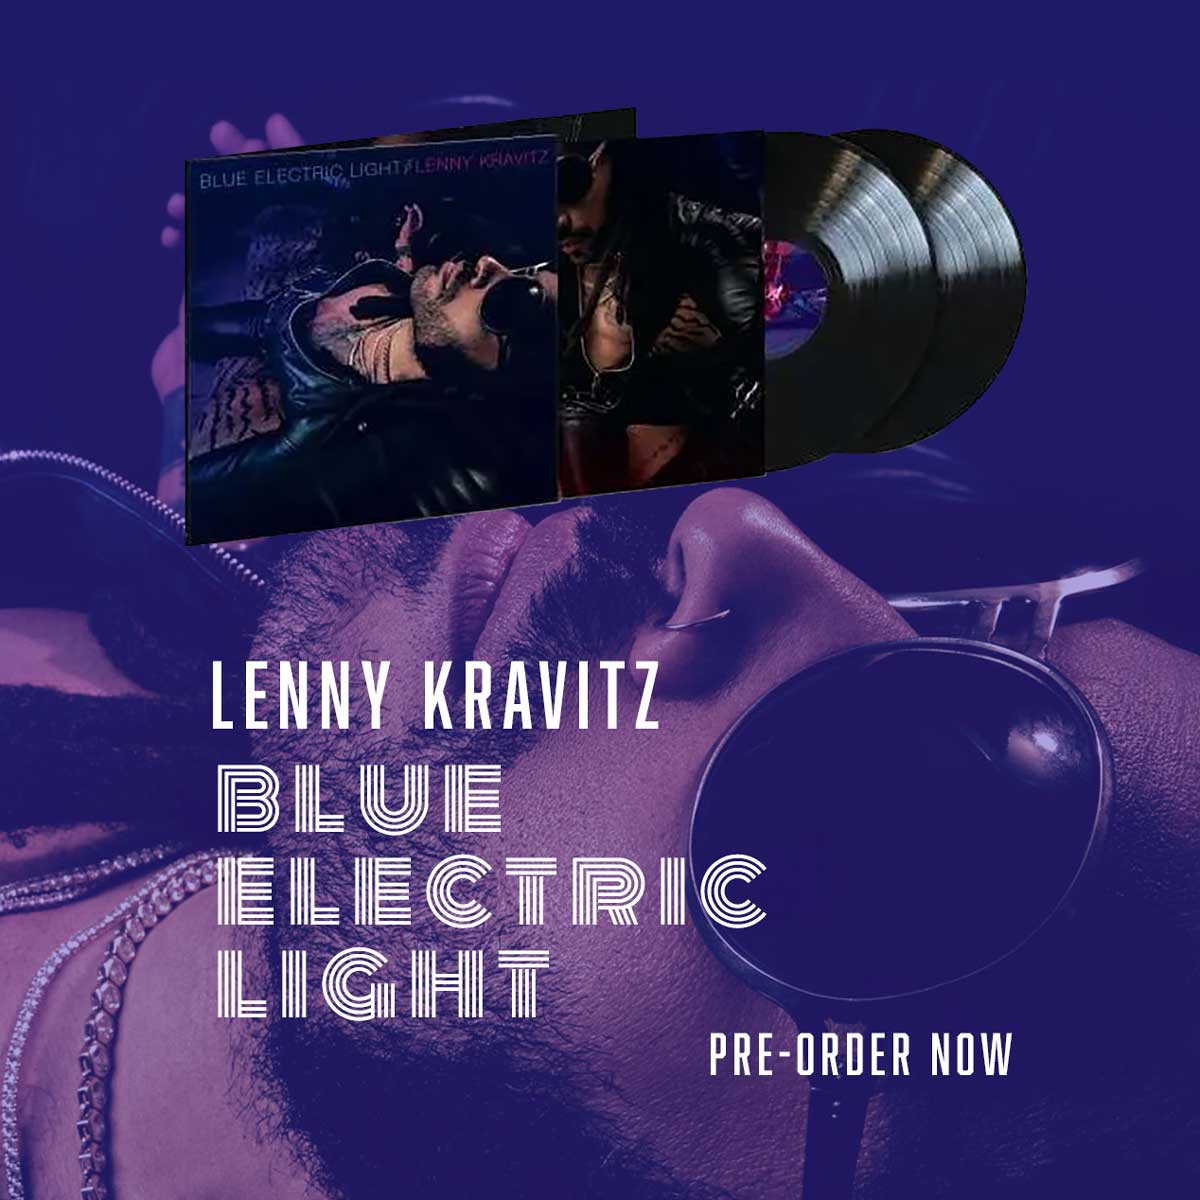 Lenny kravitz blue electric light sq